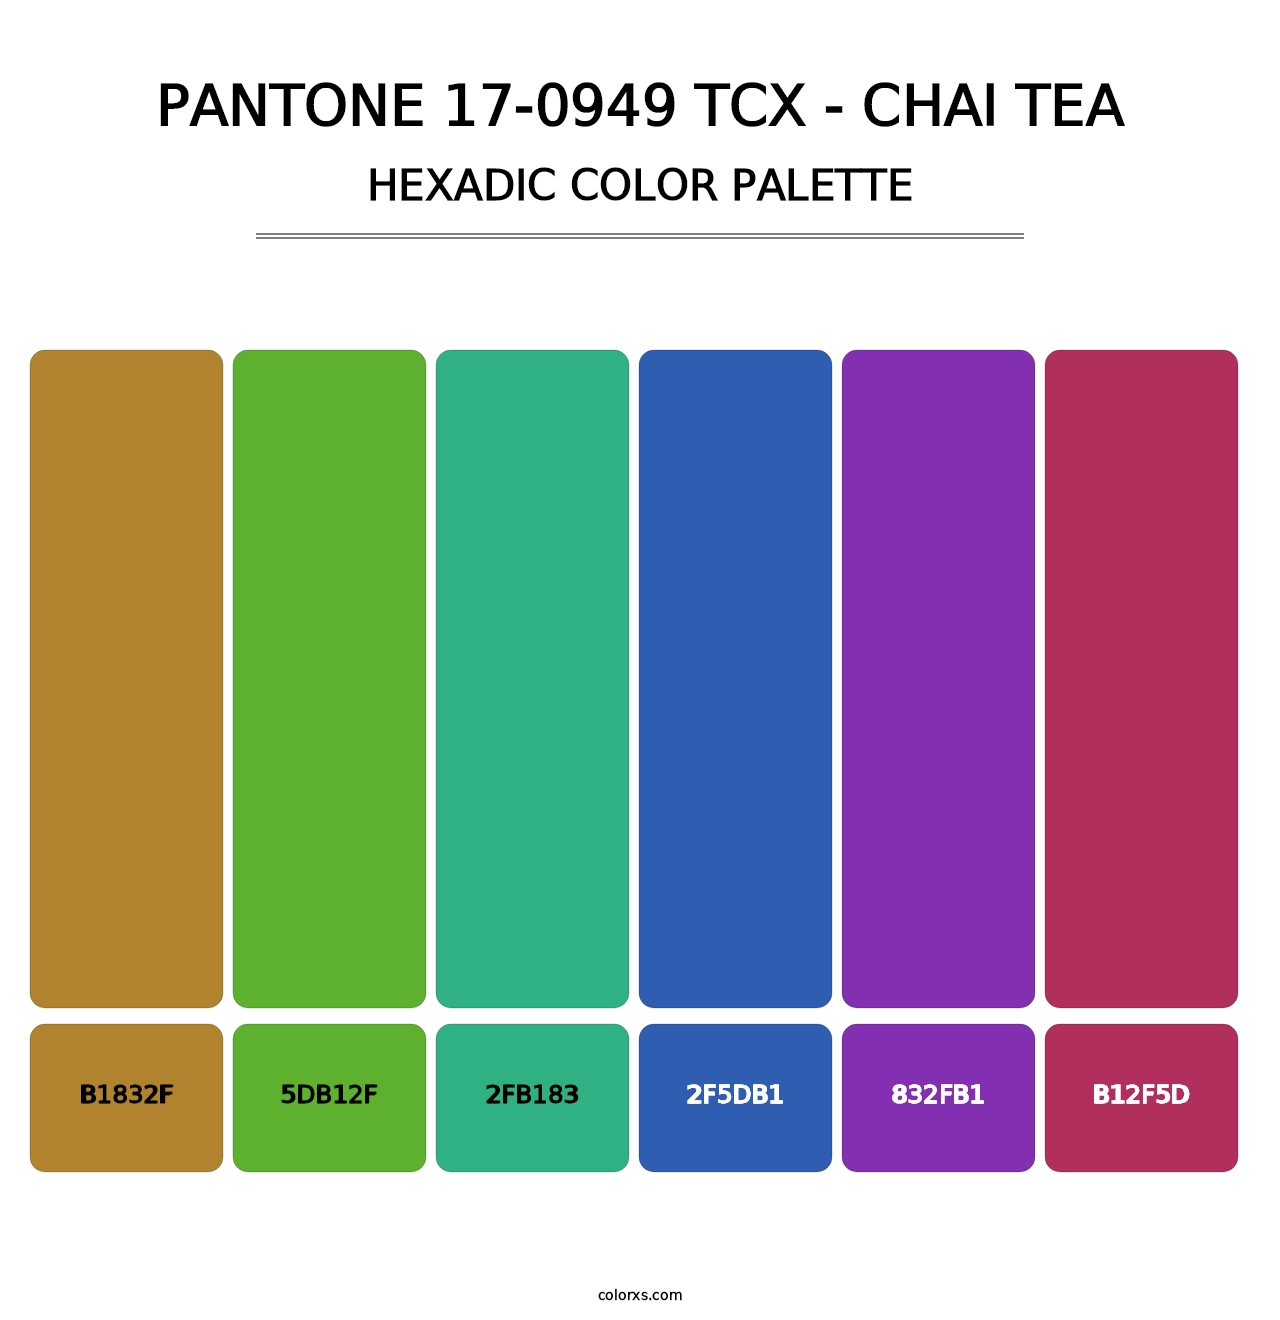 PANTONE 17-0949 TCX - Chai Tea - Hexadic Color Palette